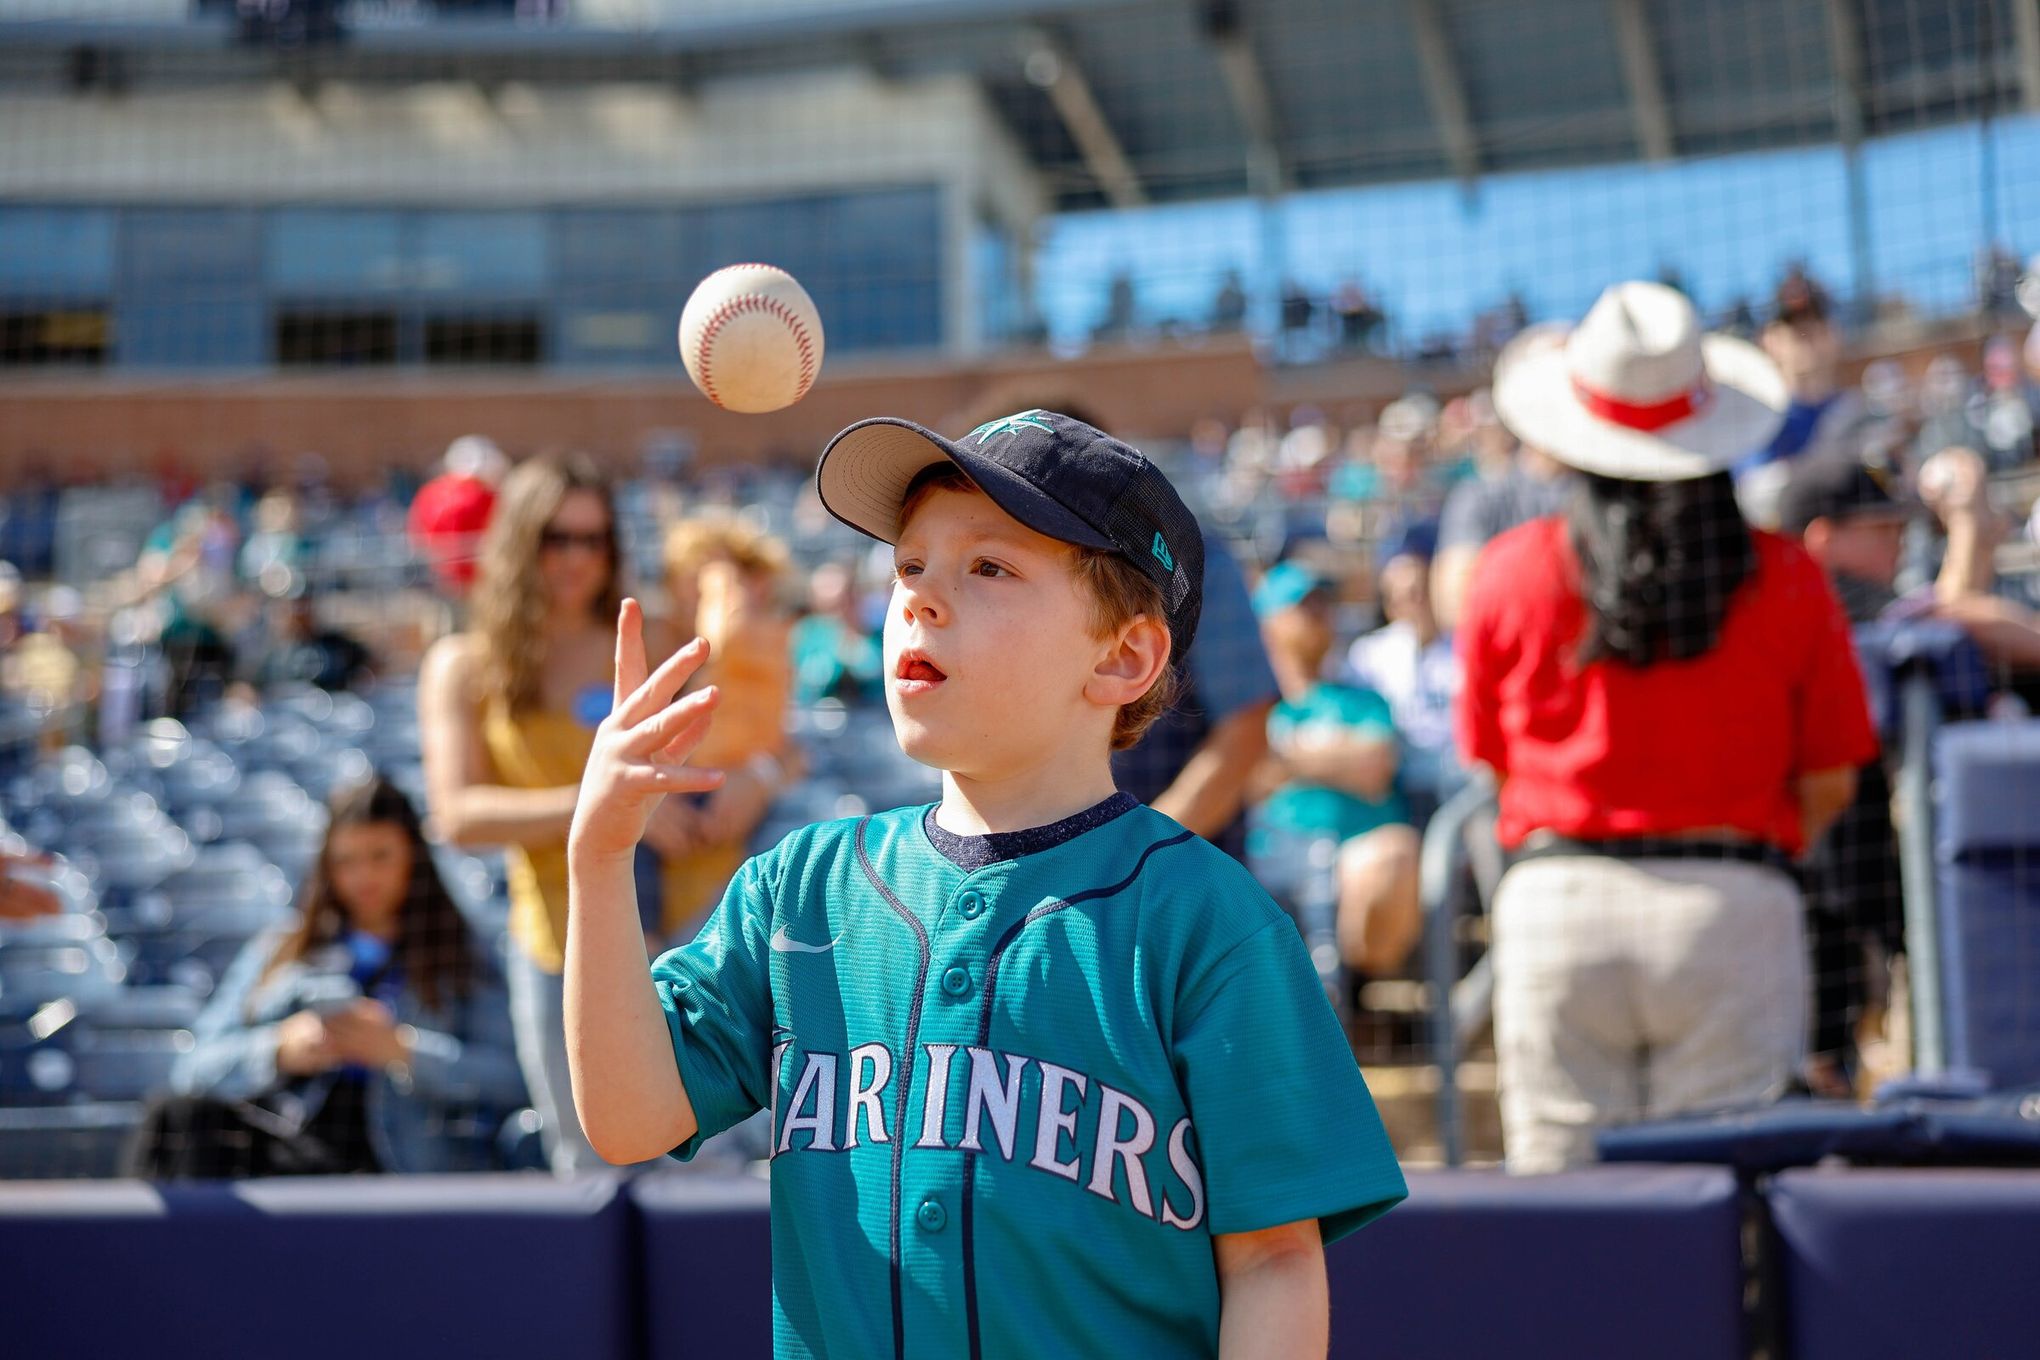 Mariners, Make-a-Wish run around bases brings joy to hearts, tears